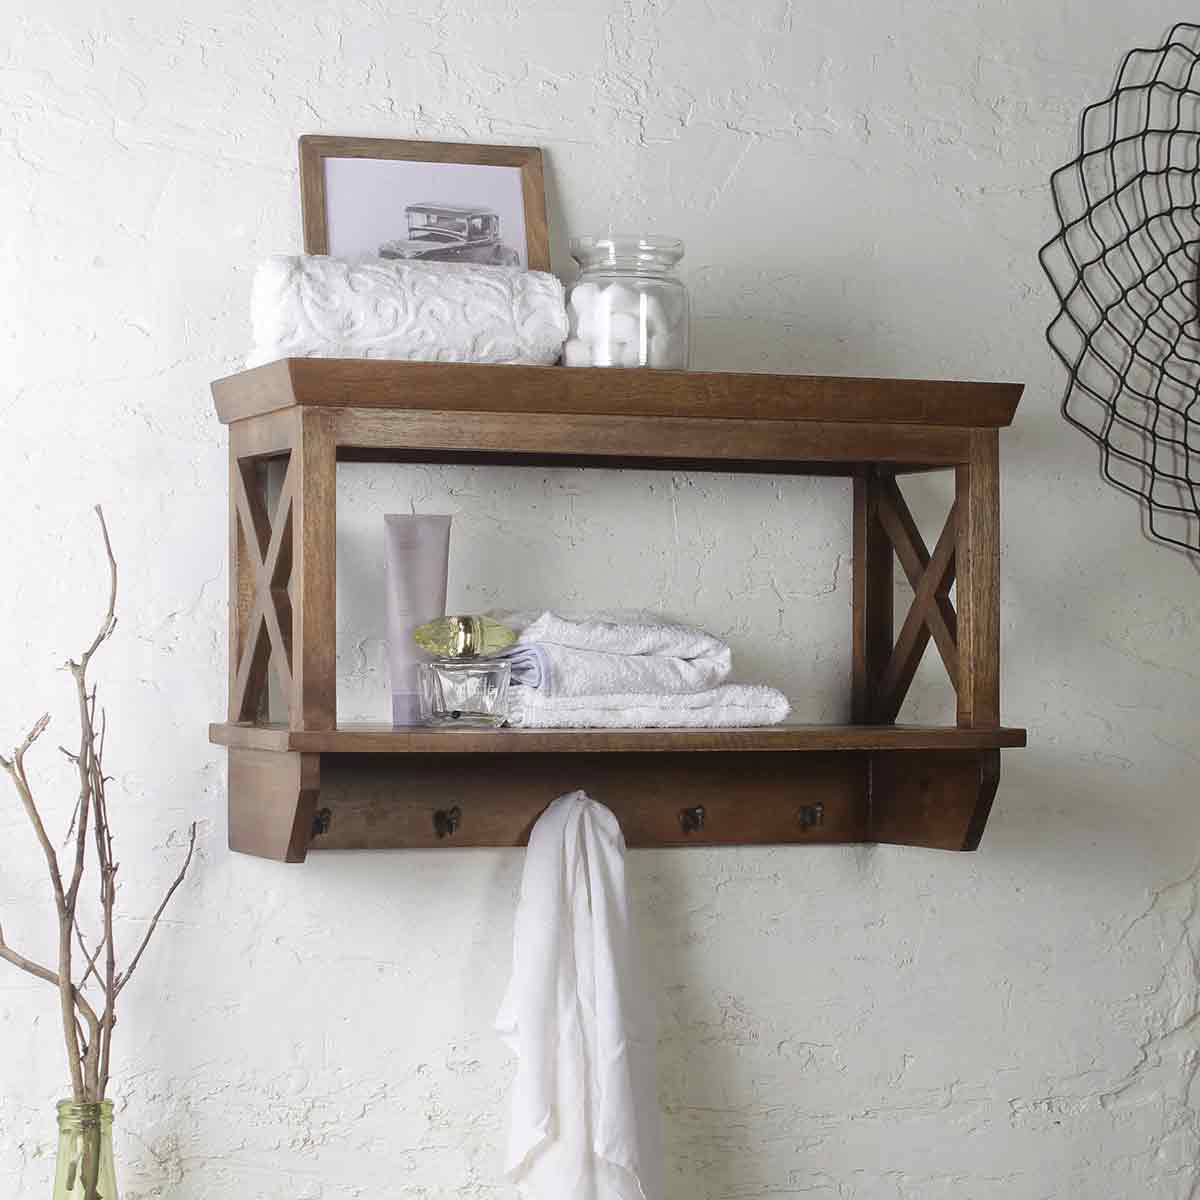 Buy Solid Wood Bathroom Shelf online